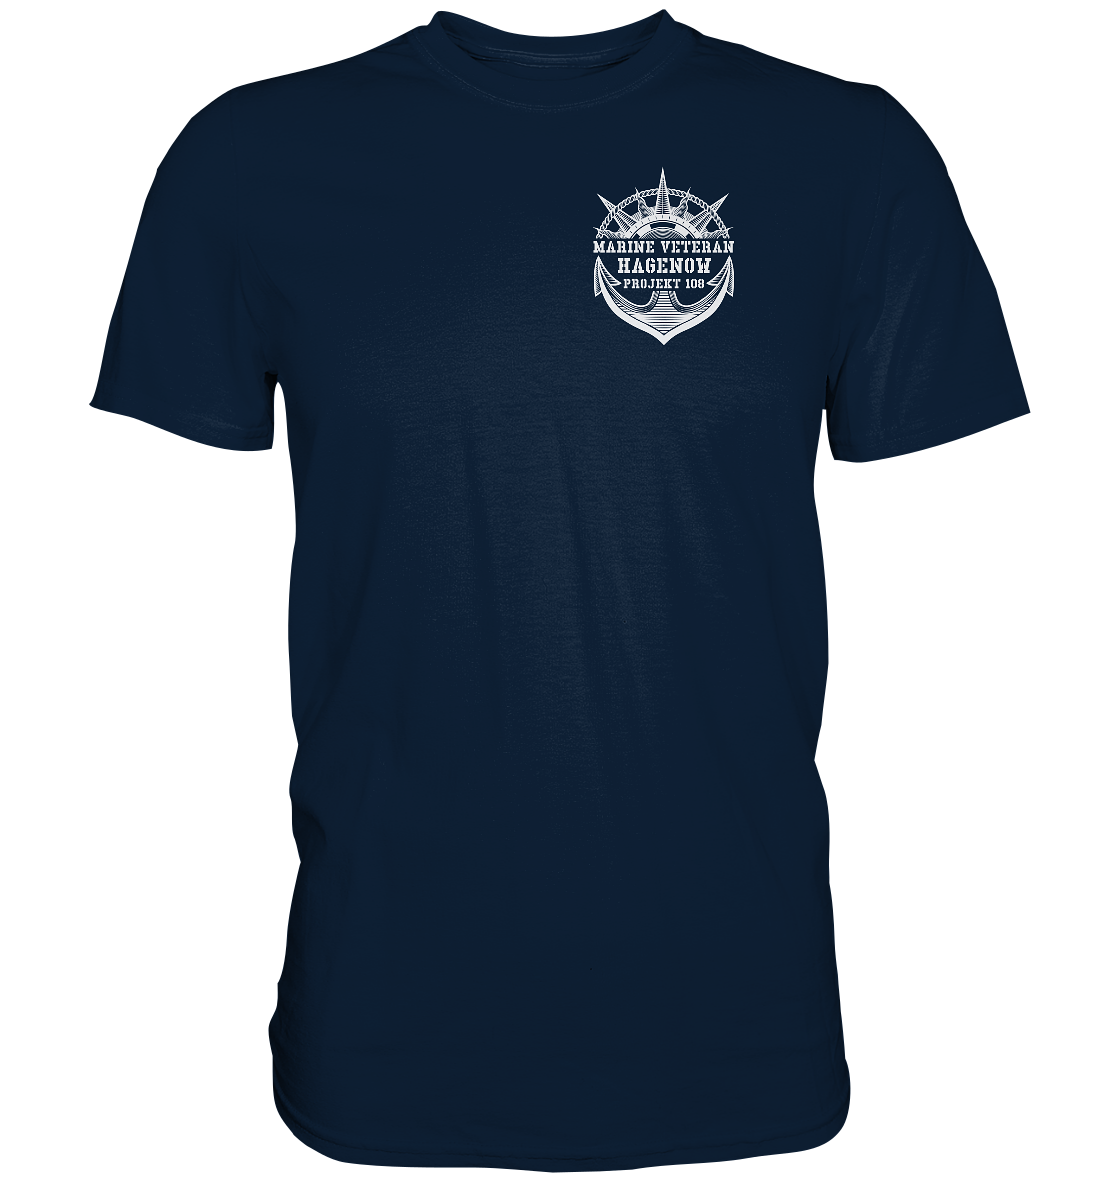 Projekt 108 HAGENOW Marine Veteran Brustlogo - Premium Shirt